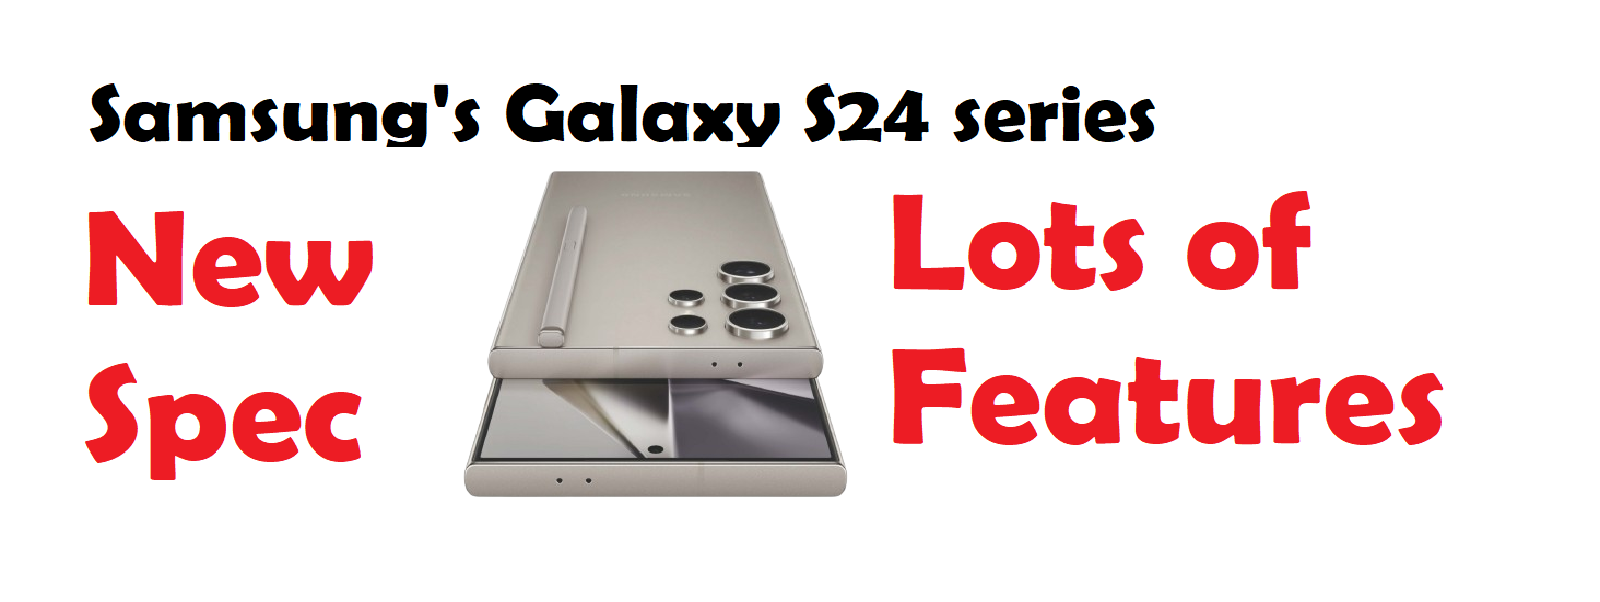 Samsung's Galaxy S24 series